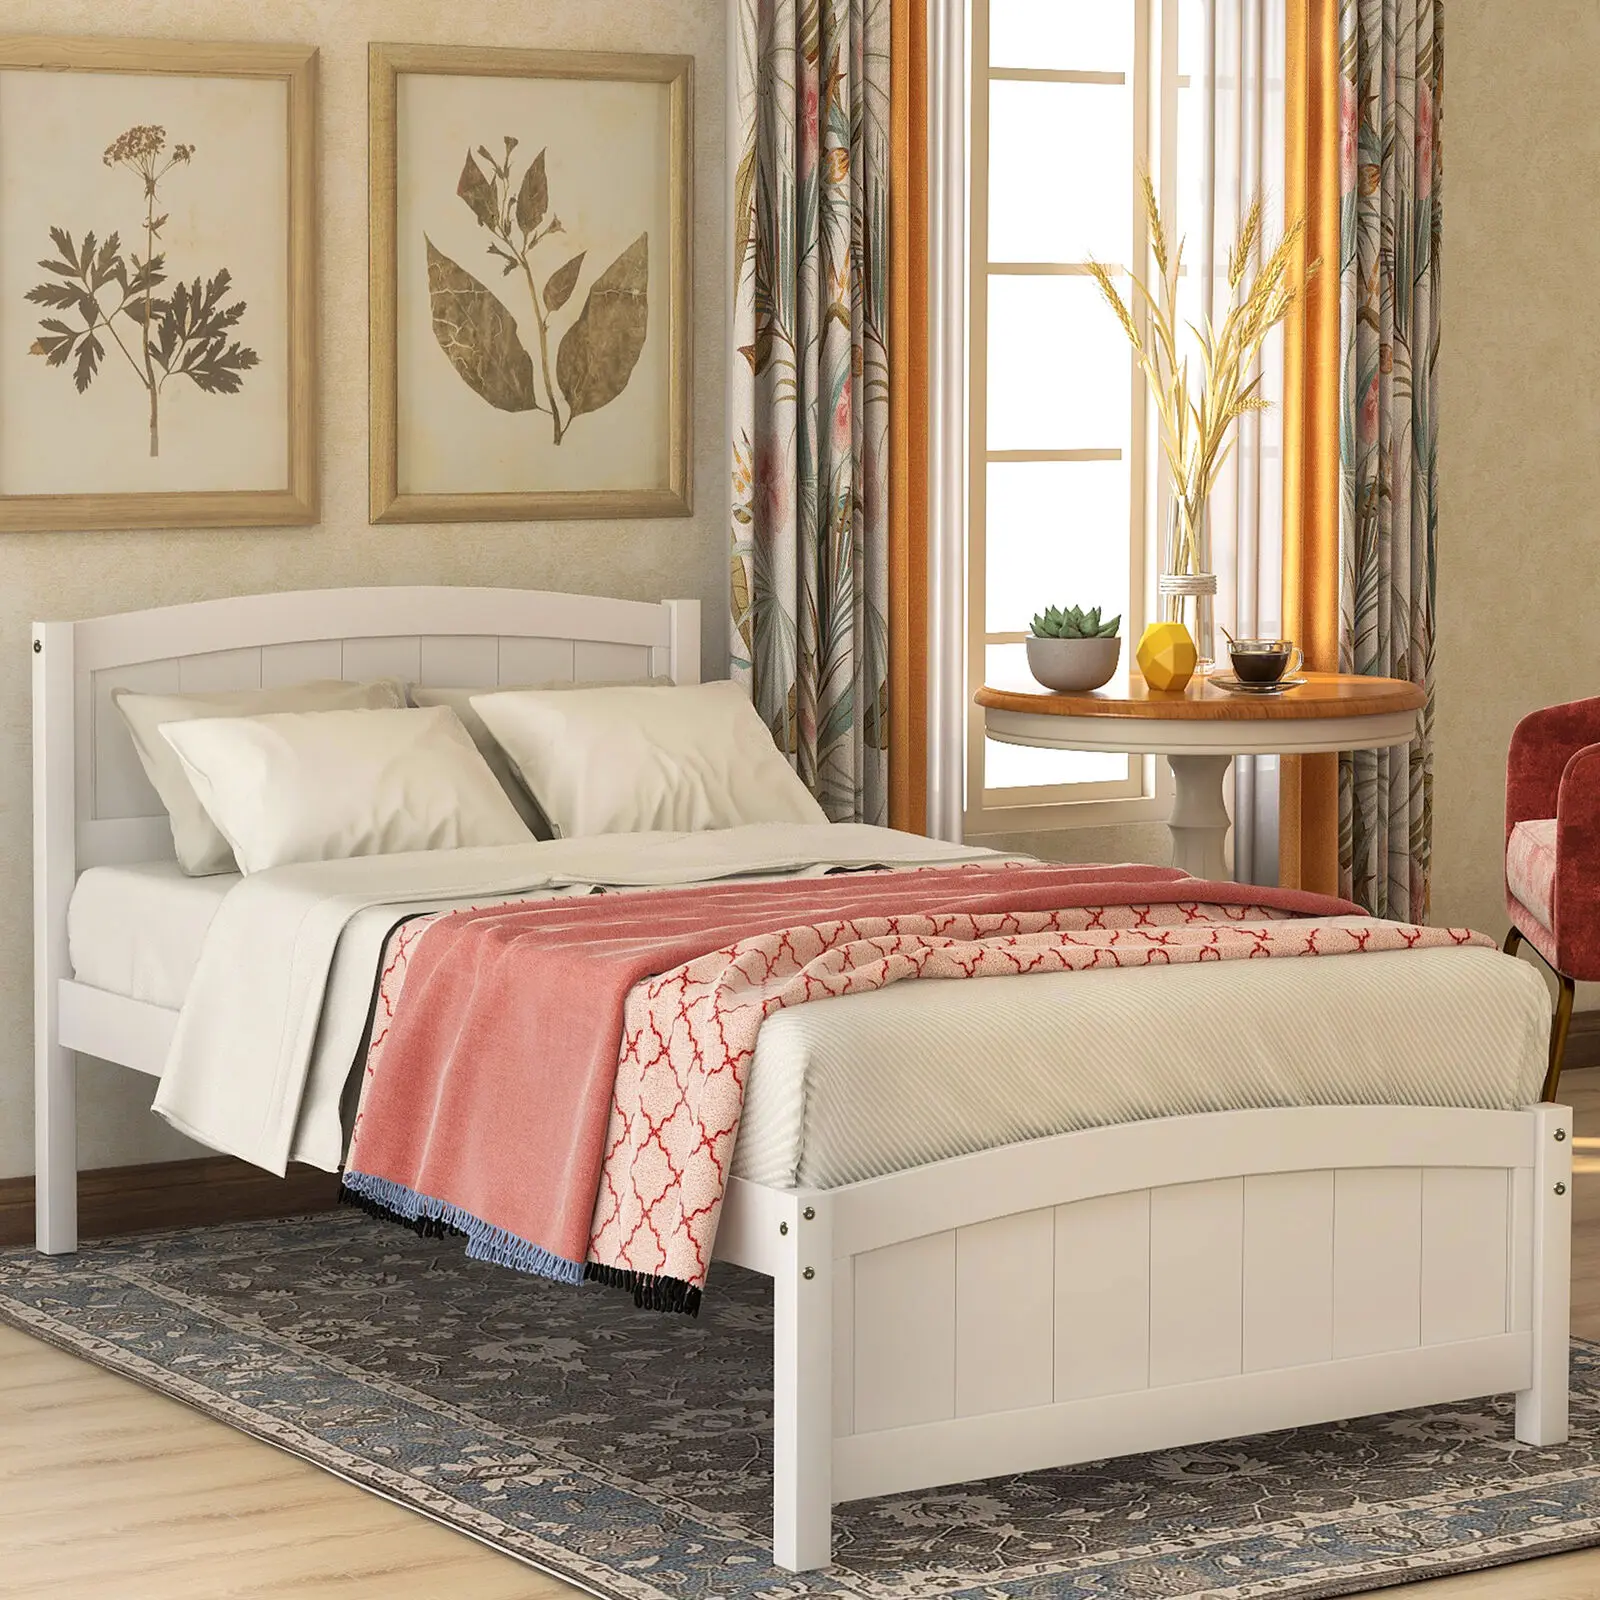 

Wood Platform Bed with Headboard,Footboard & Wood Slat Support,Stylish Bed Frame